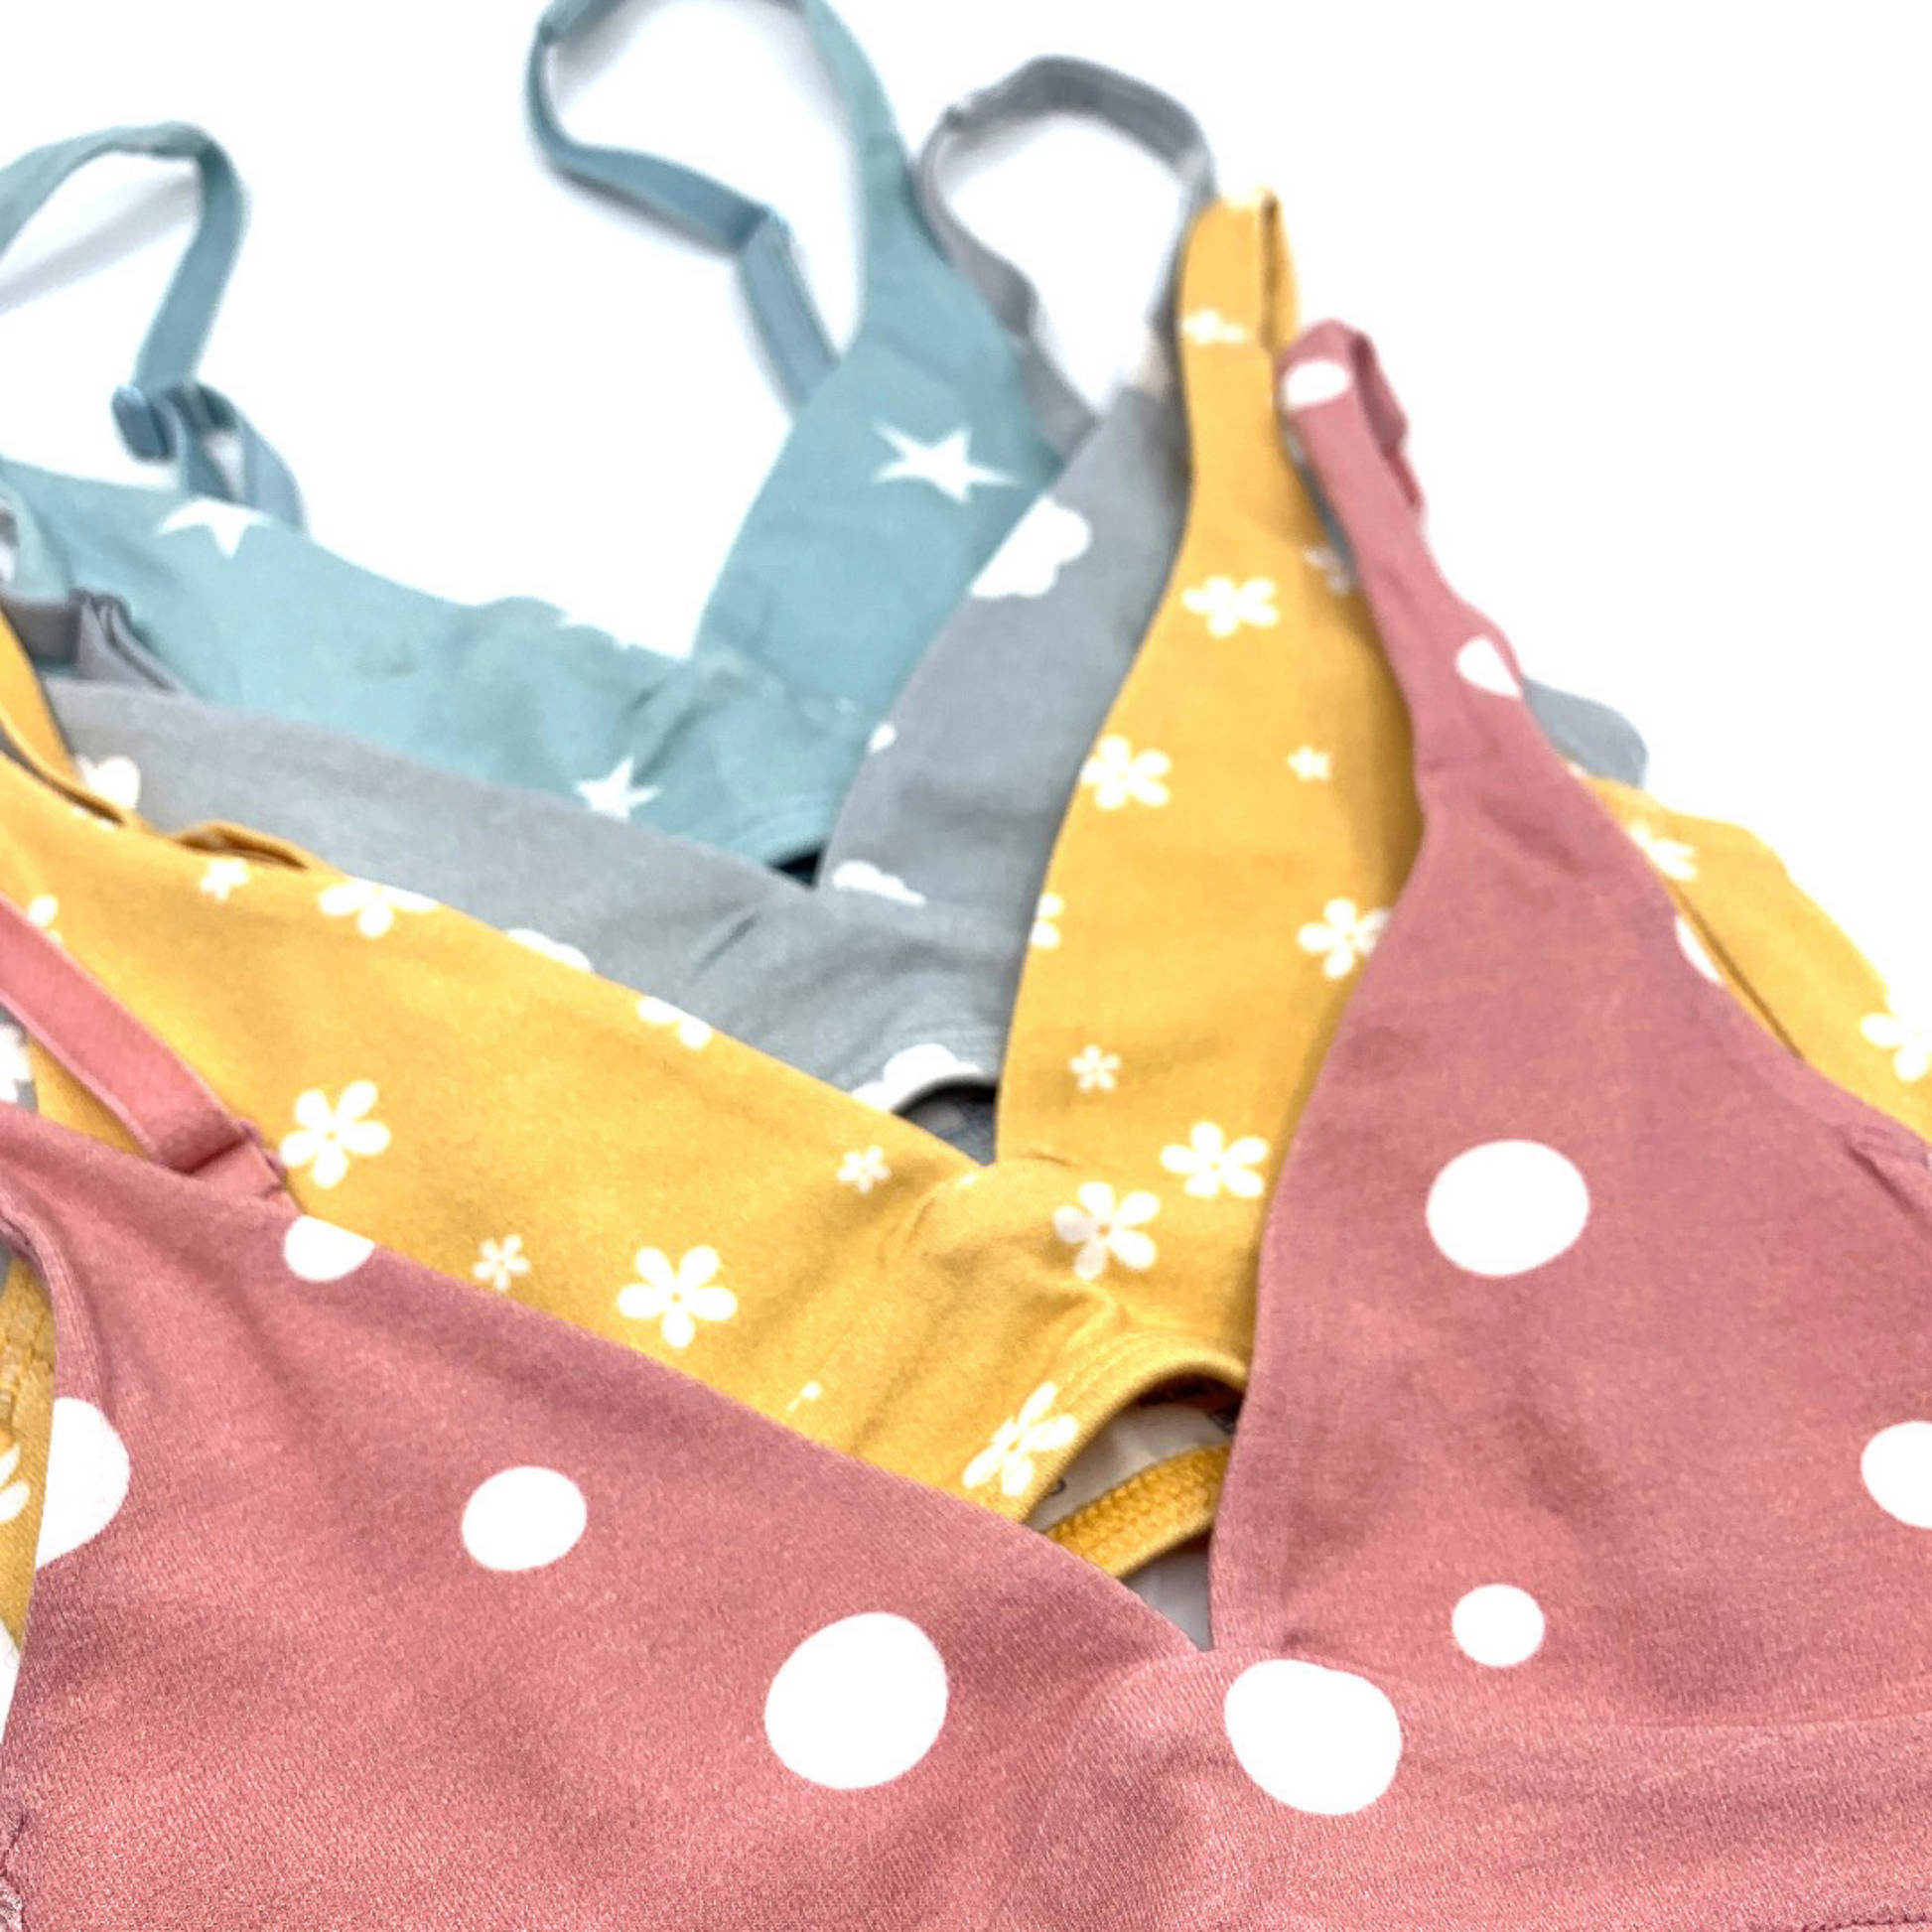 Girls' organic cotton bralettes - Kira pack of 2 pick 'n' mix – Y.O.U  underwear